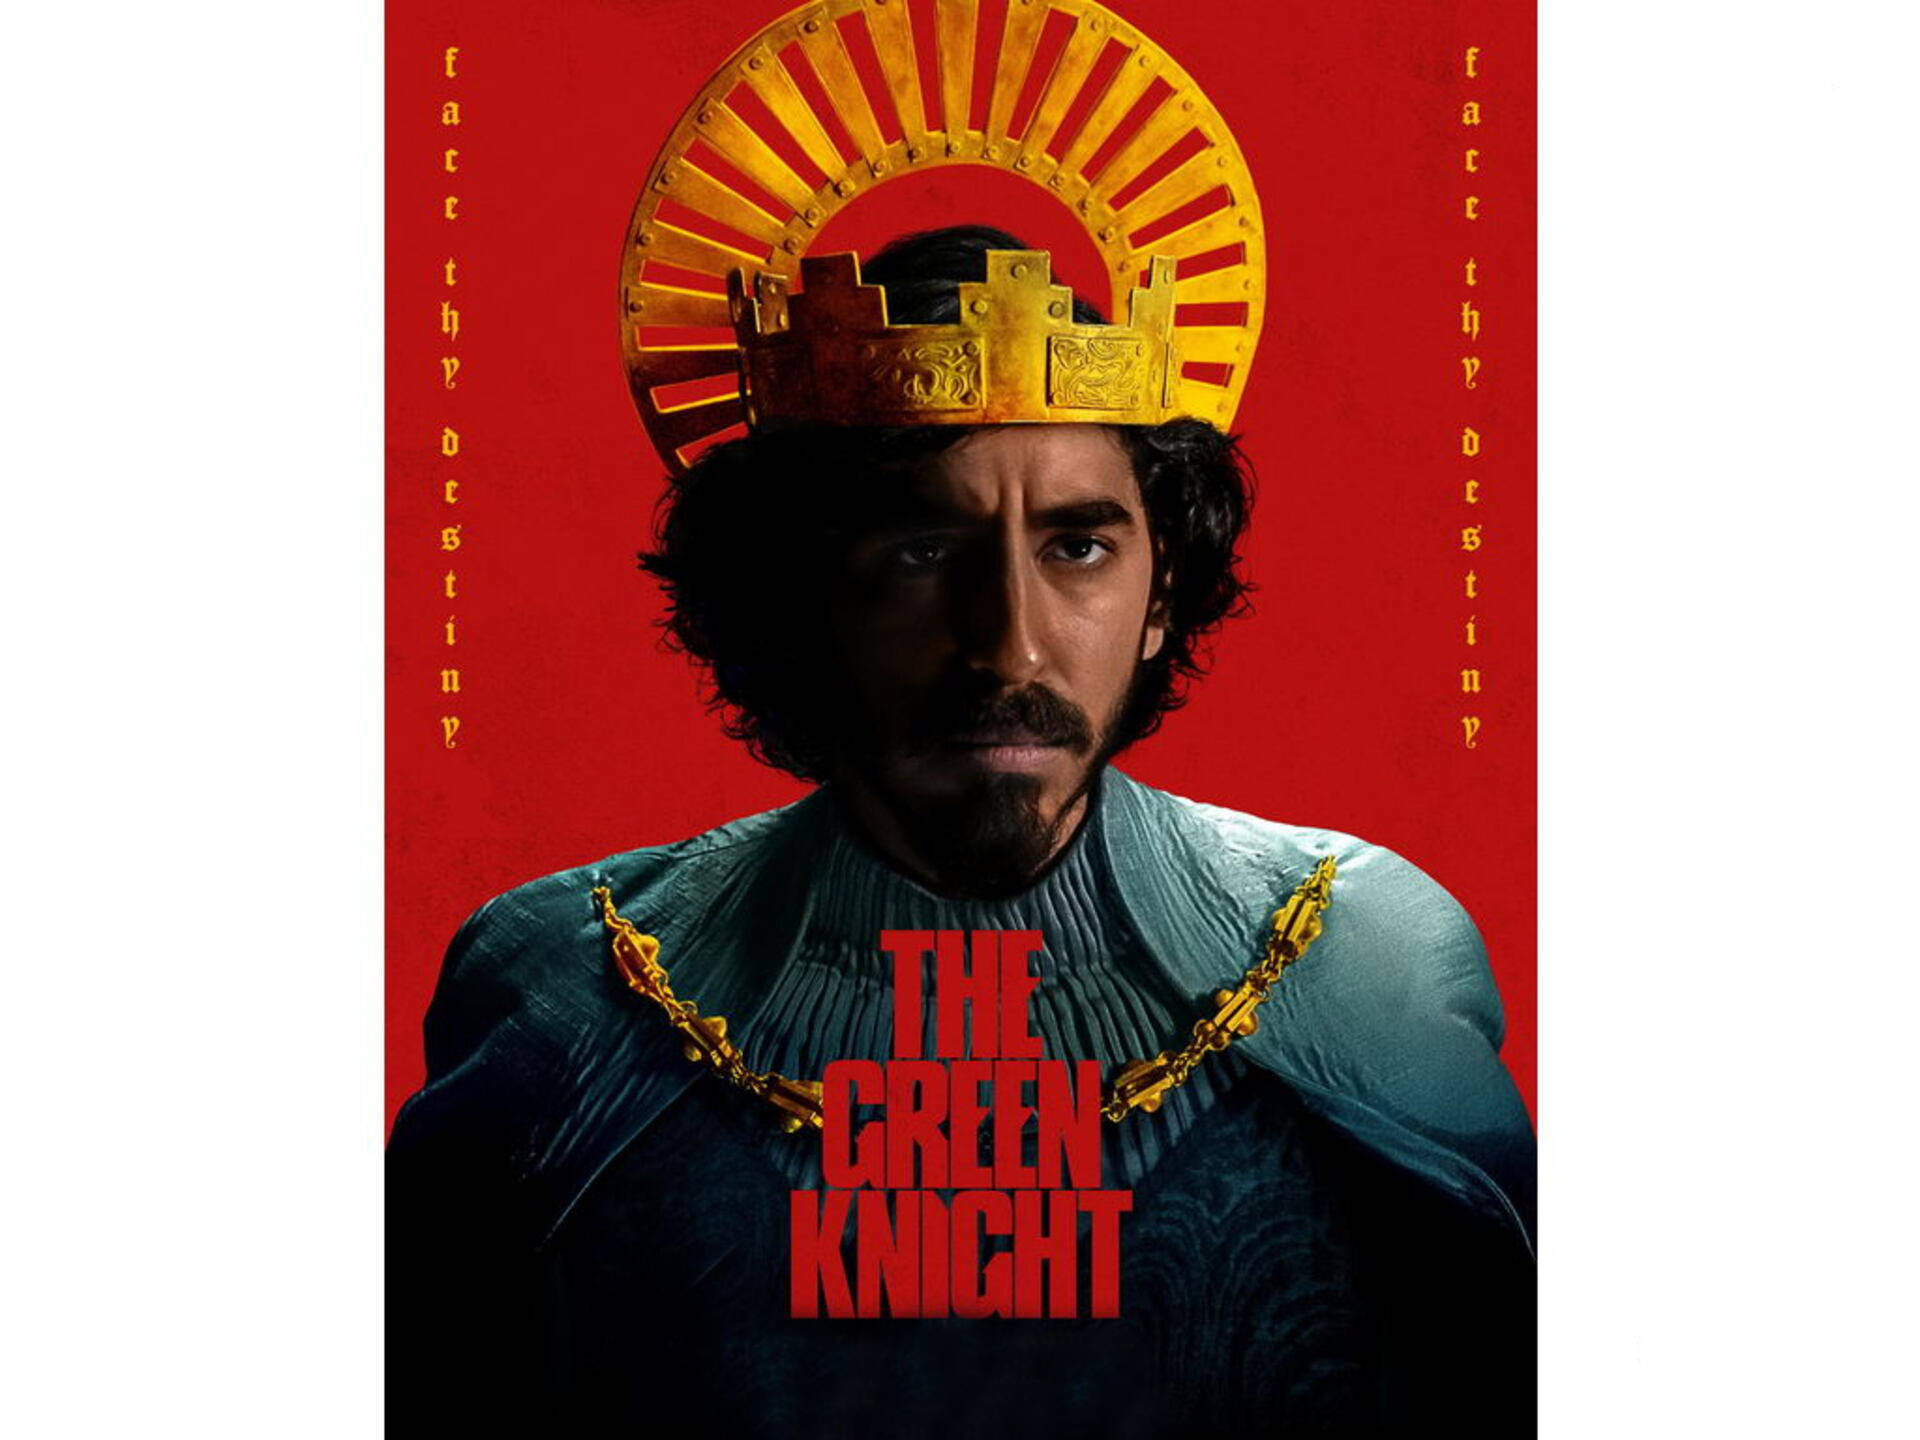 The Green Knight Dev Patel Film Poster Wallpaper